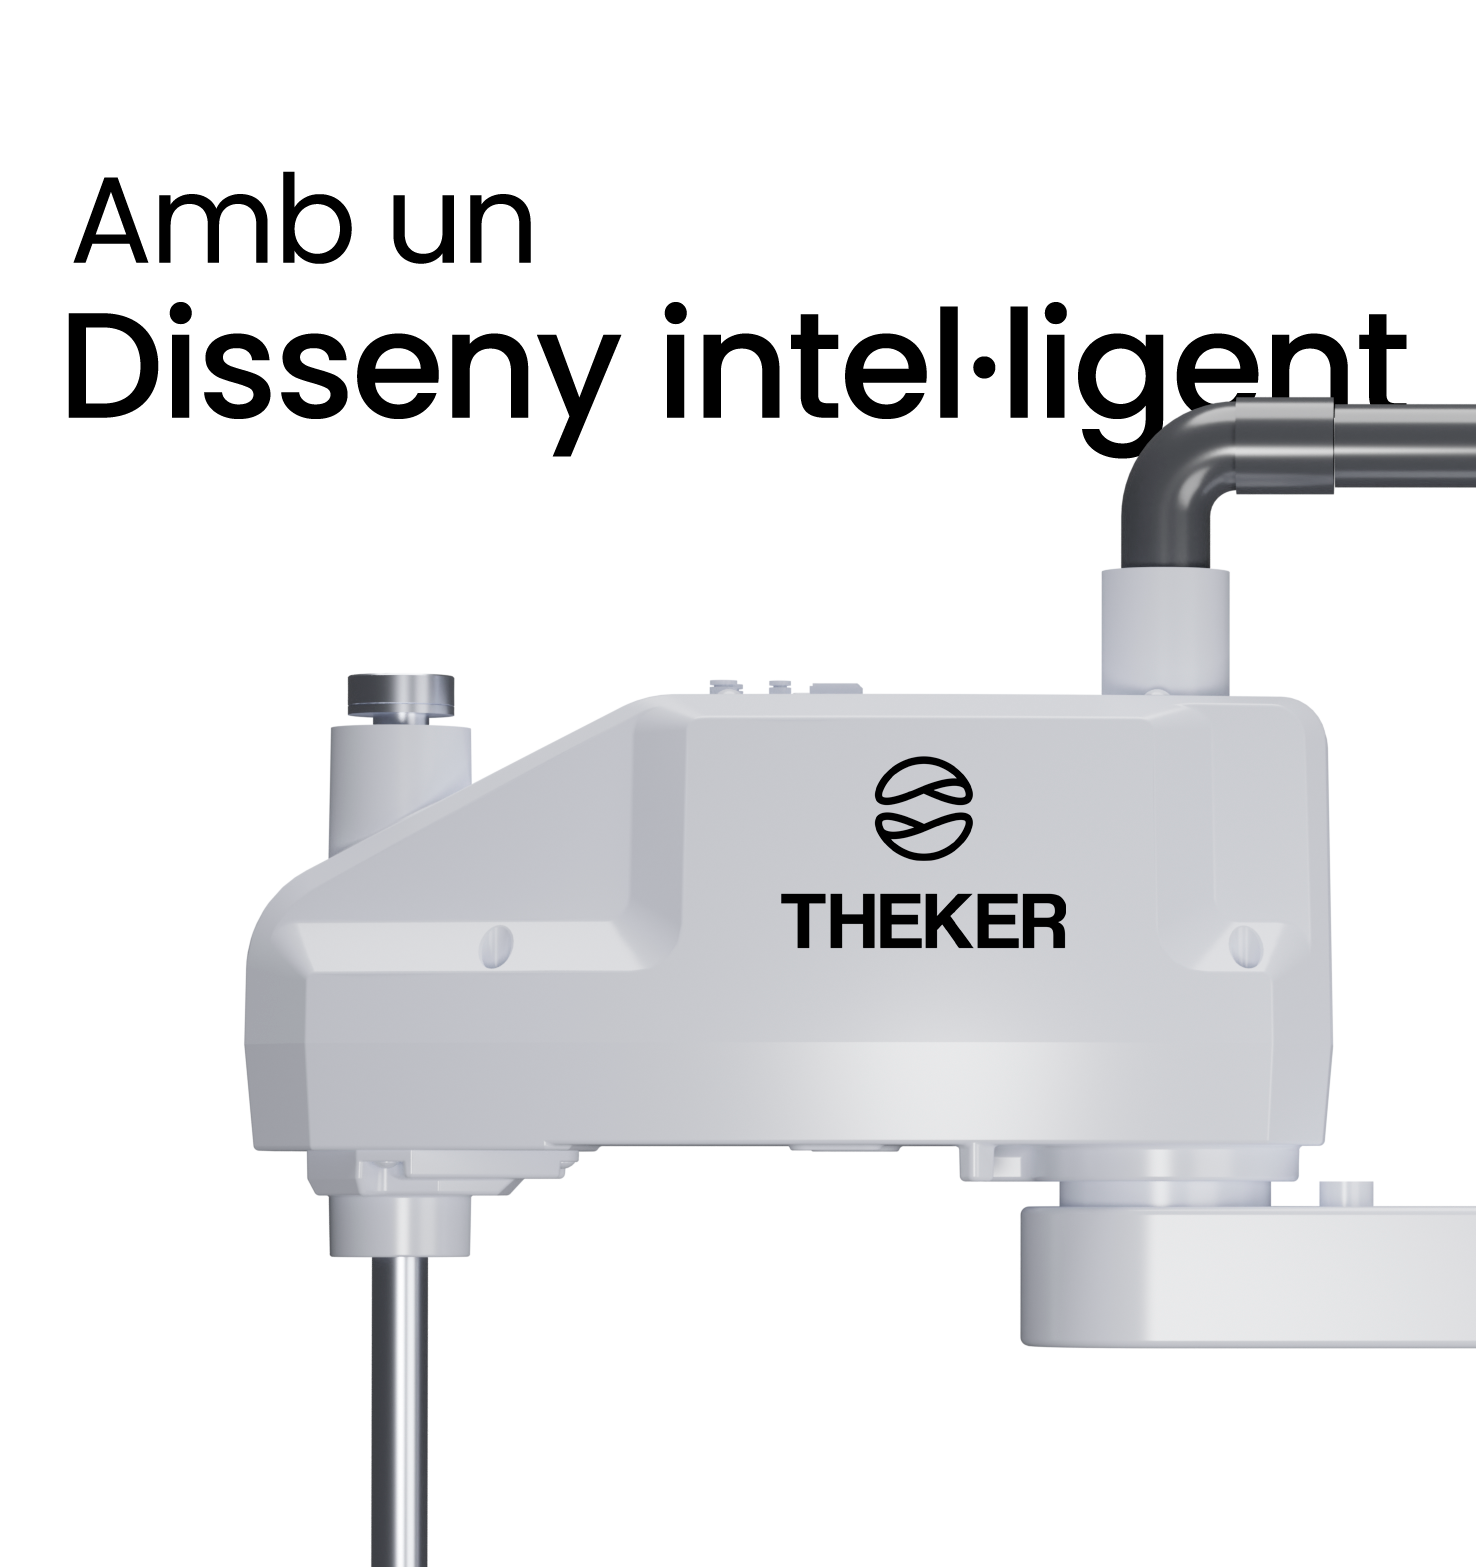 THEKER robotics smart design scara robot